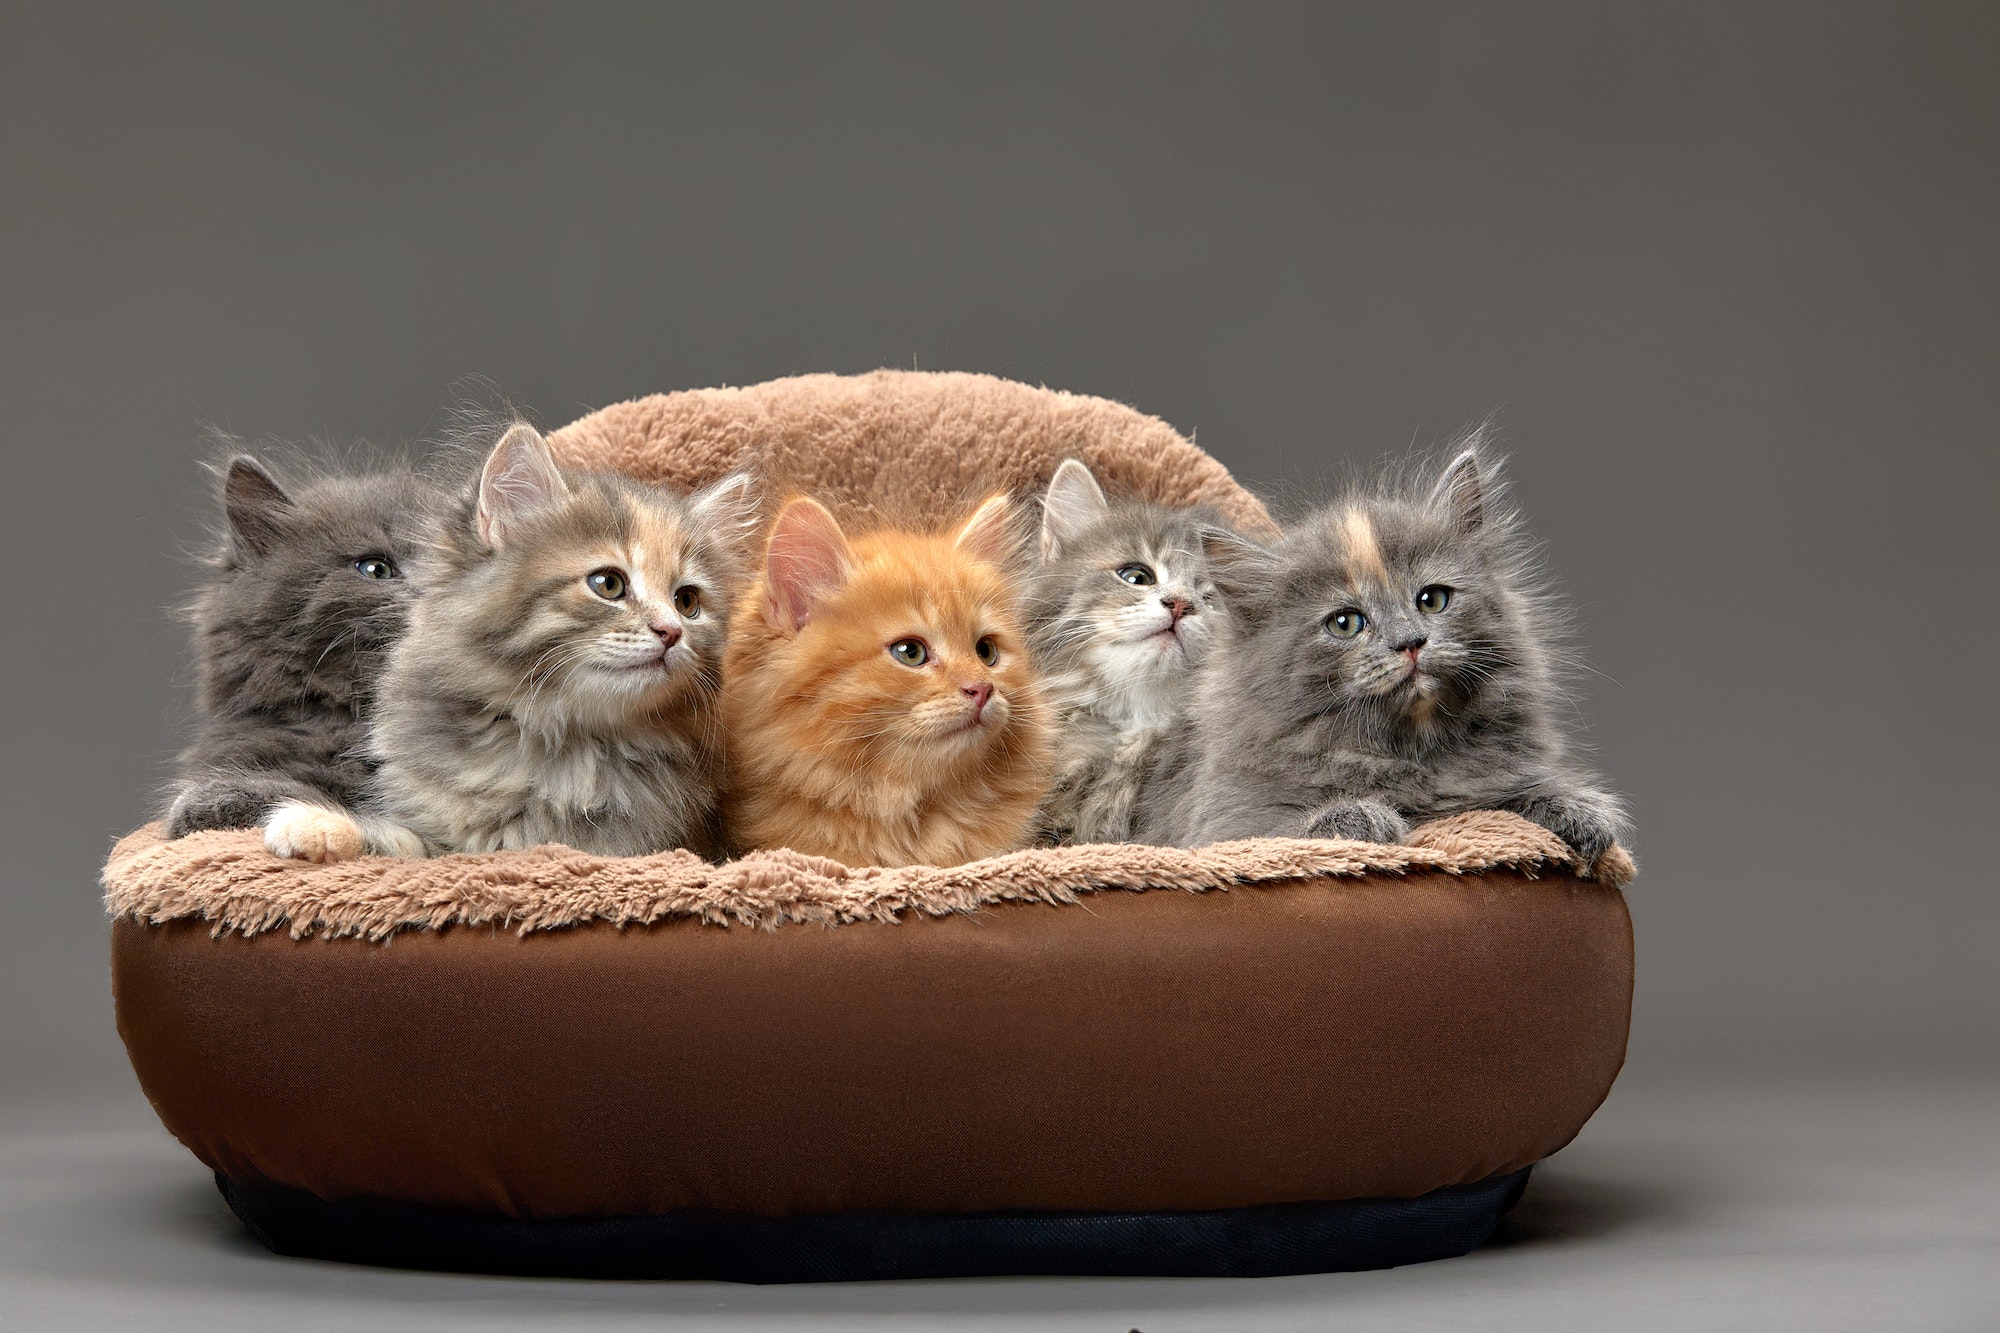 Little kittens sitting in a cat bed